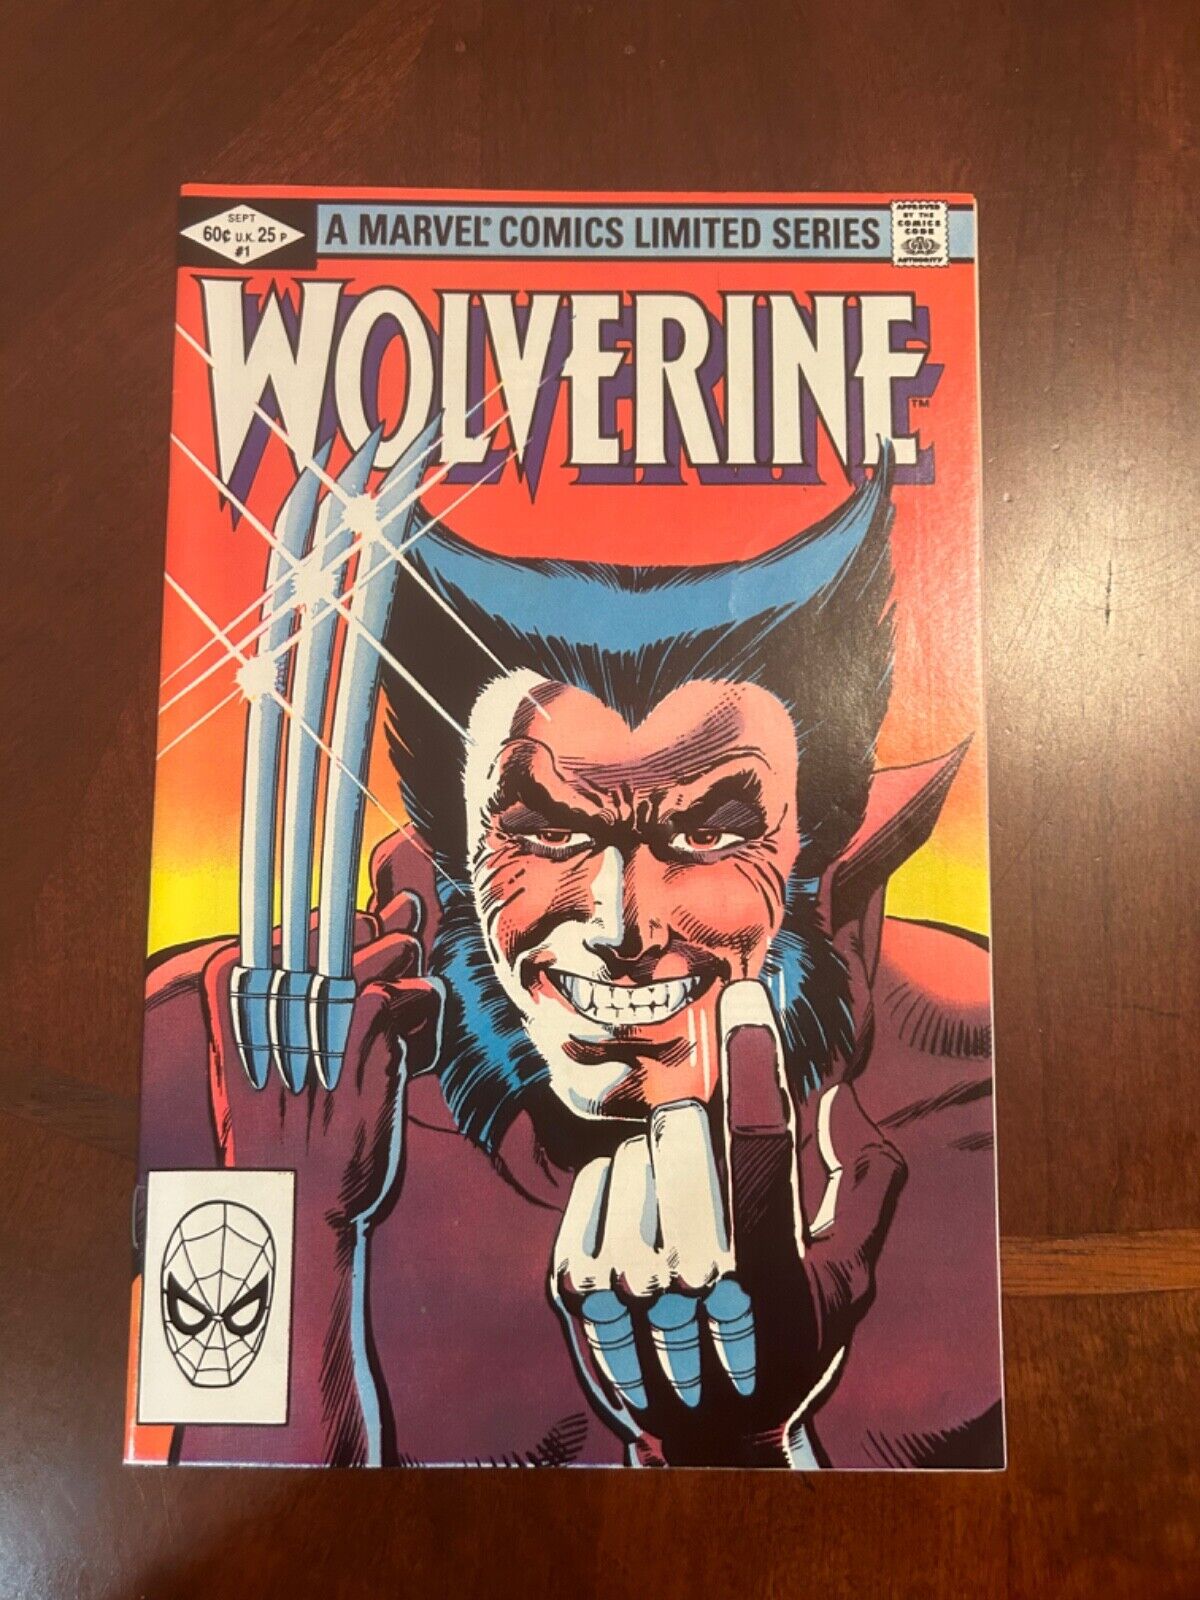 Marvel WOLVERINE Limited Series #1 (1982) -NM